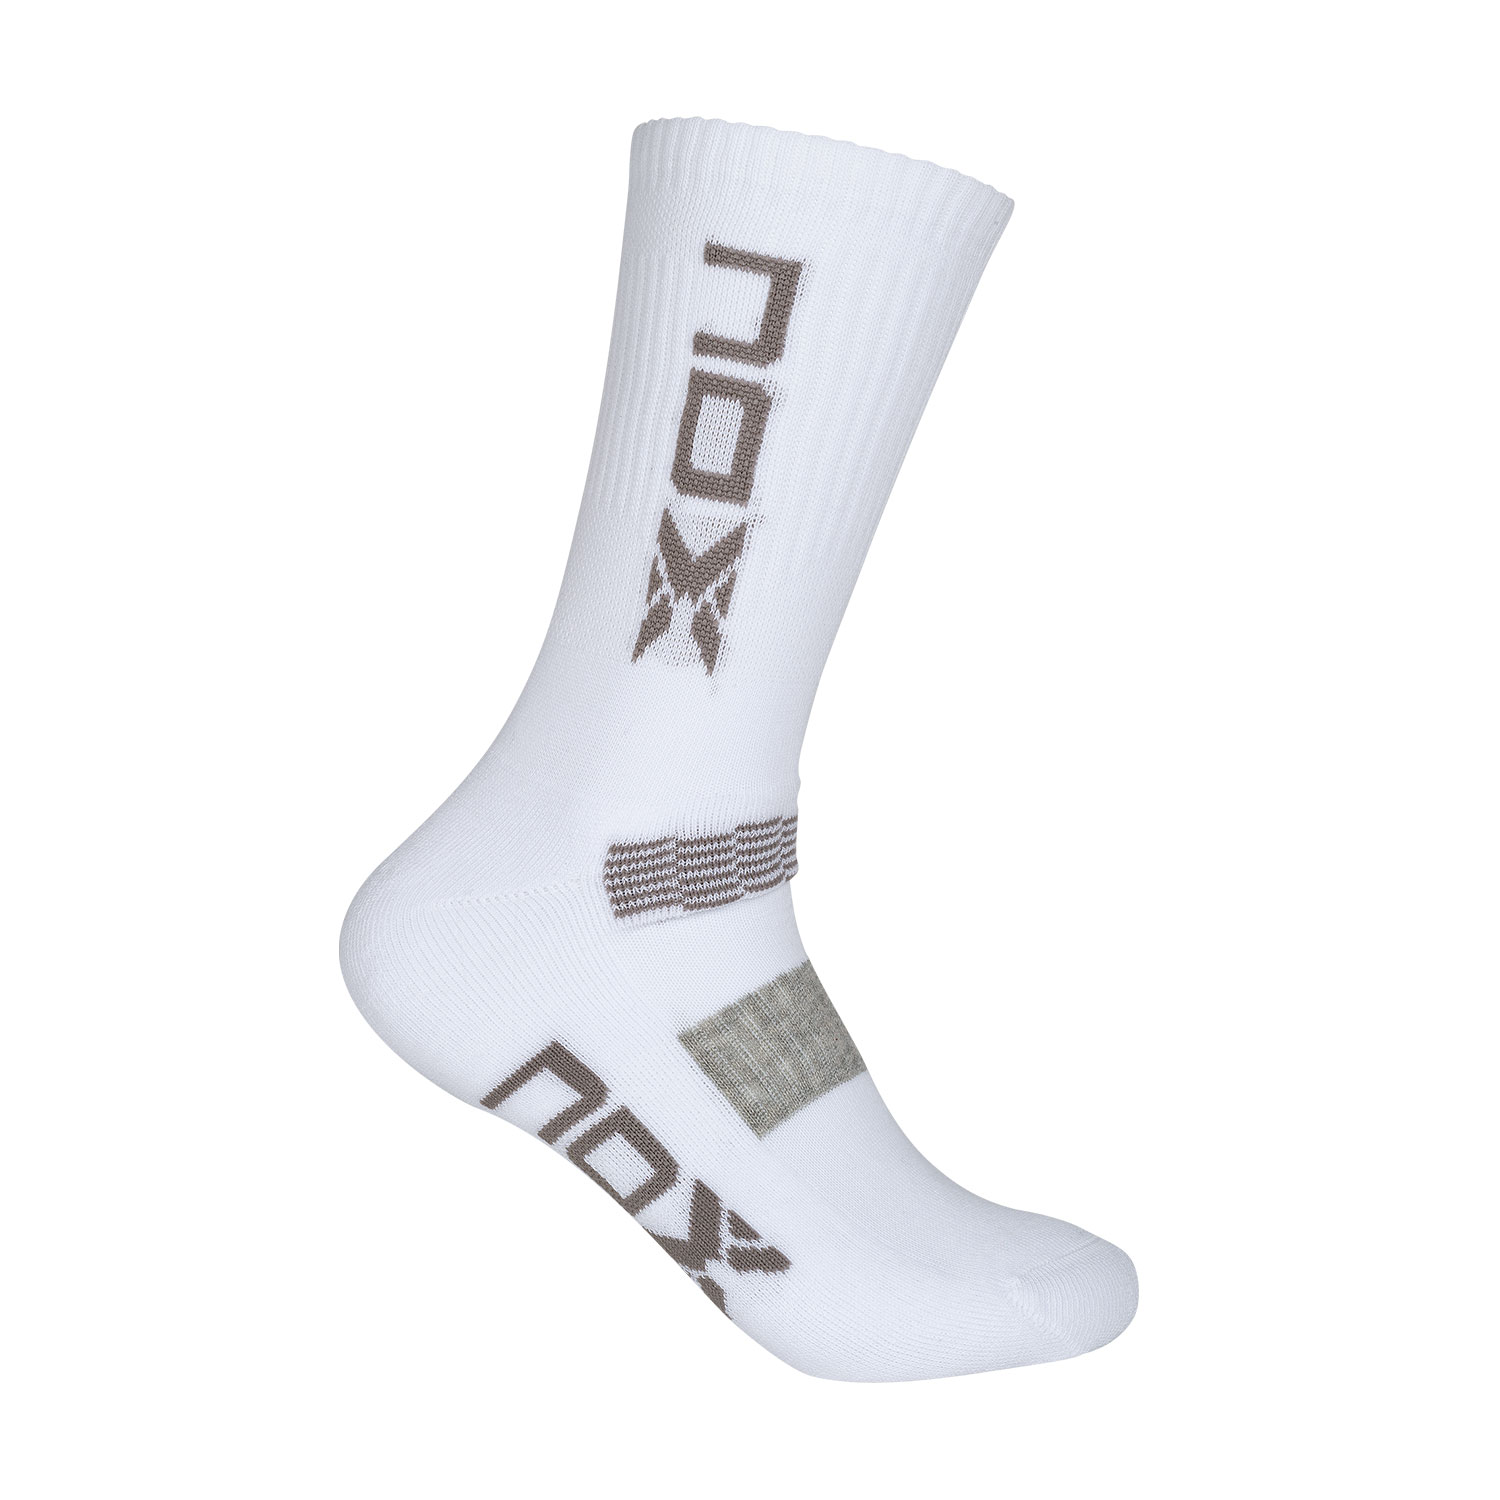 NOX Technical Socks - Blanco/Gris